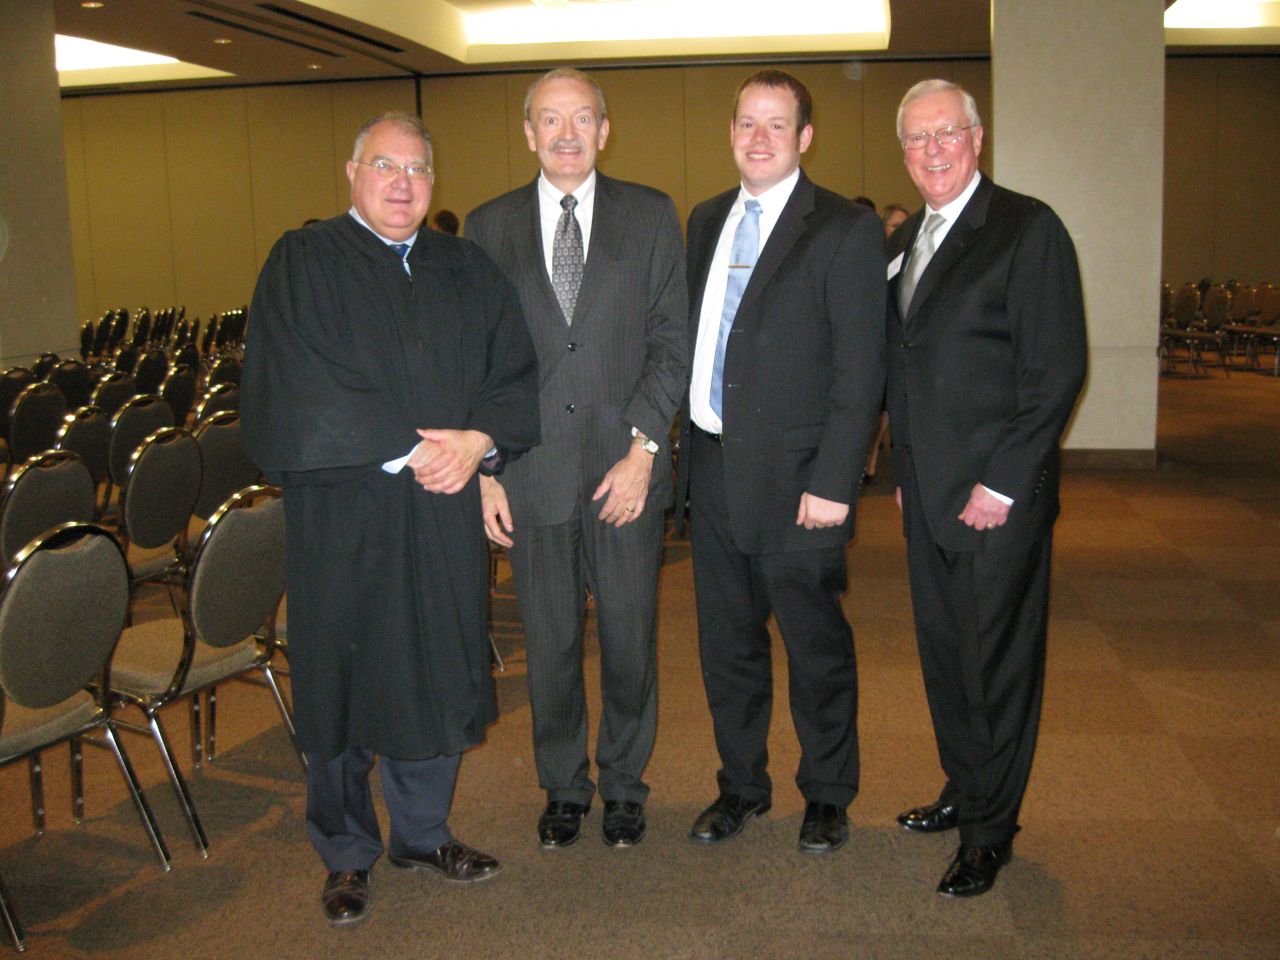 Justice Robert L. Carter, ISBA member Mark McGrath, his son, new admittee Patrick McGrath and ISBA President John O'Brien